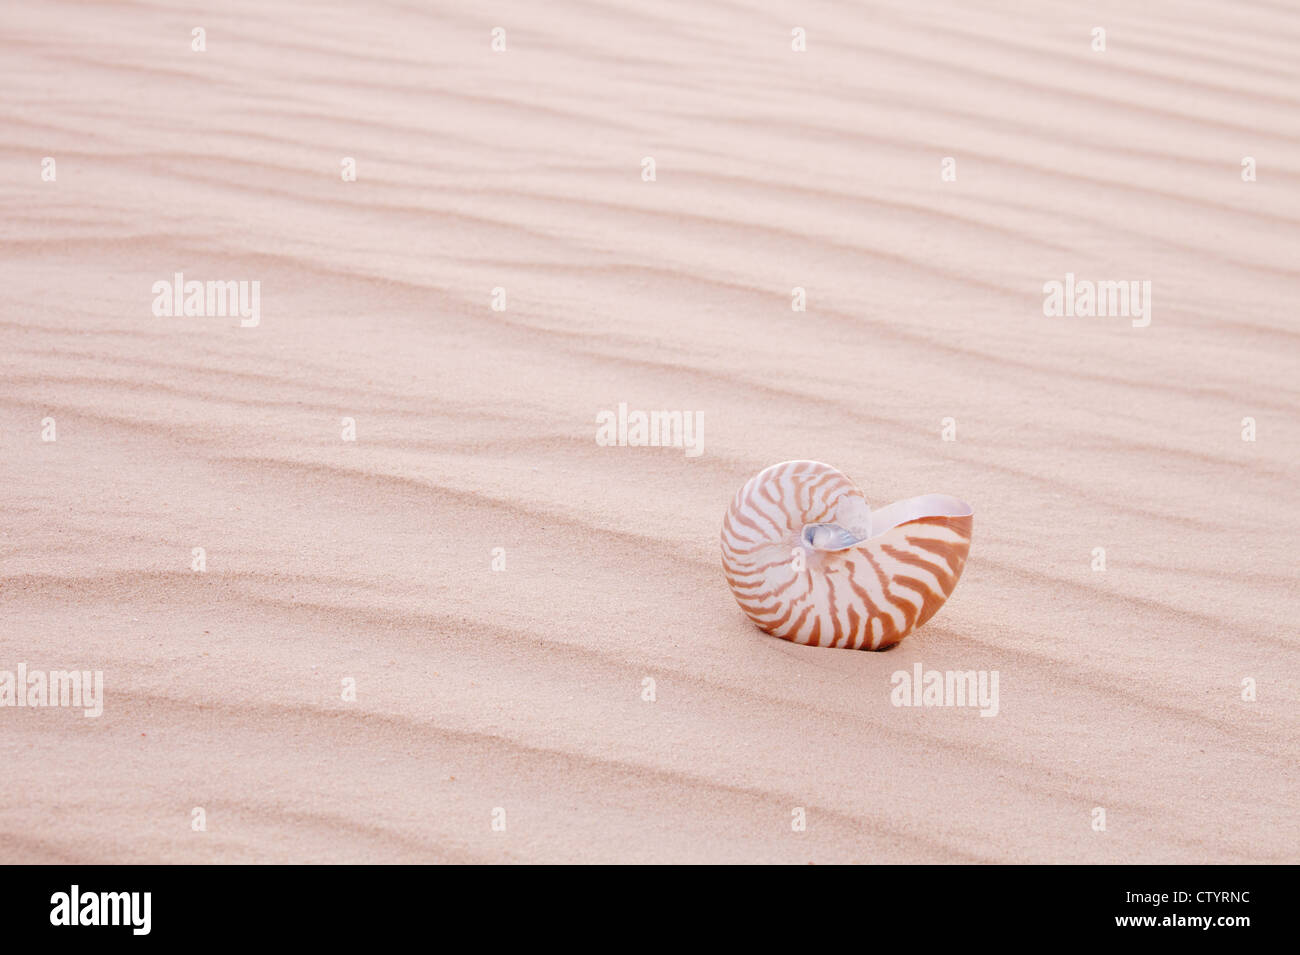 Nautilus pompilius shell in sand dune, shallow dof Stock Photo